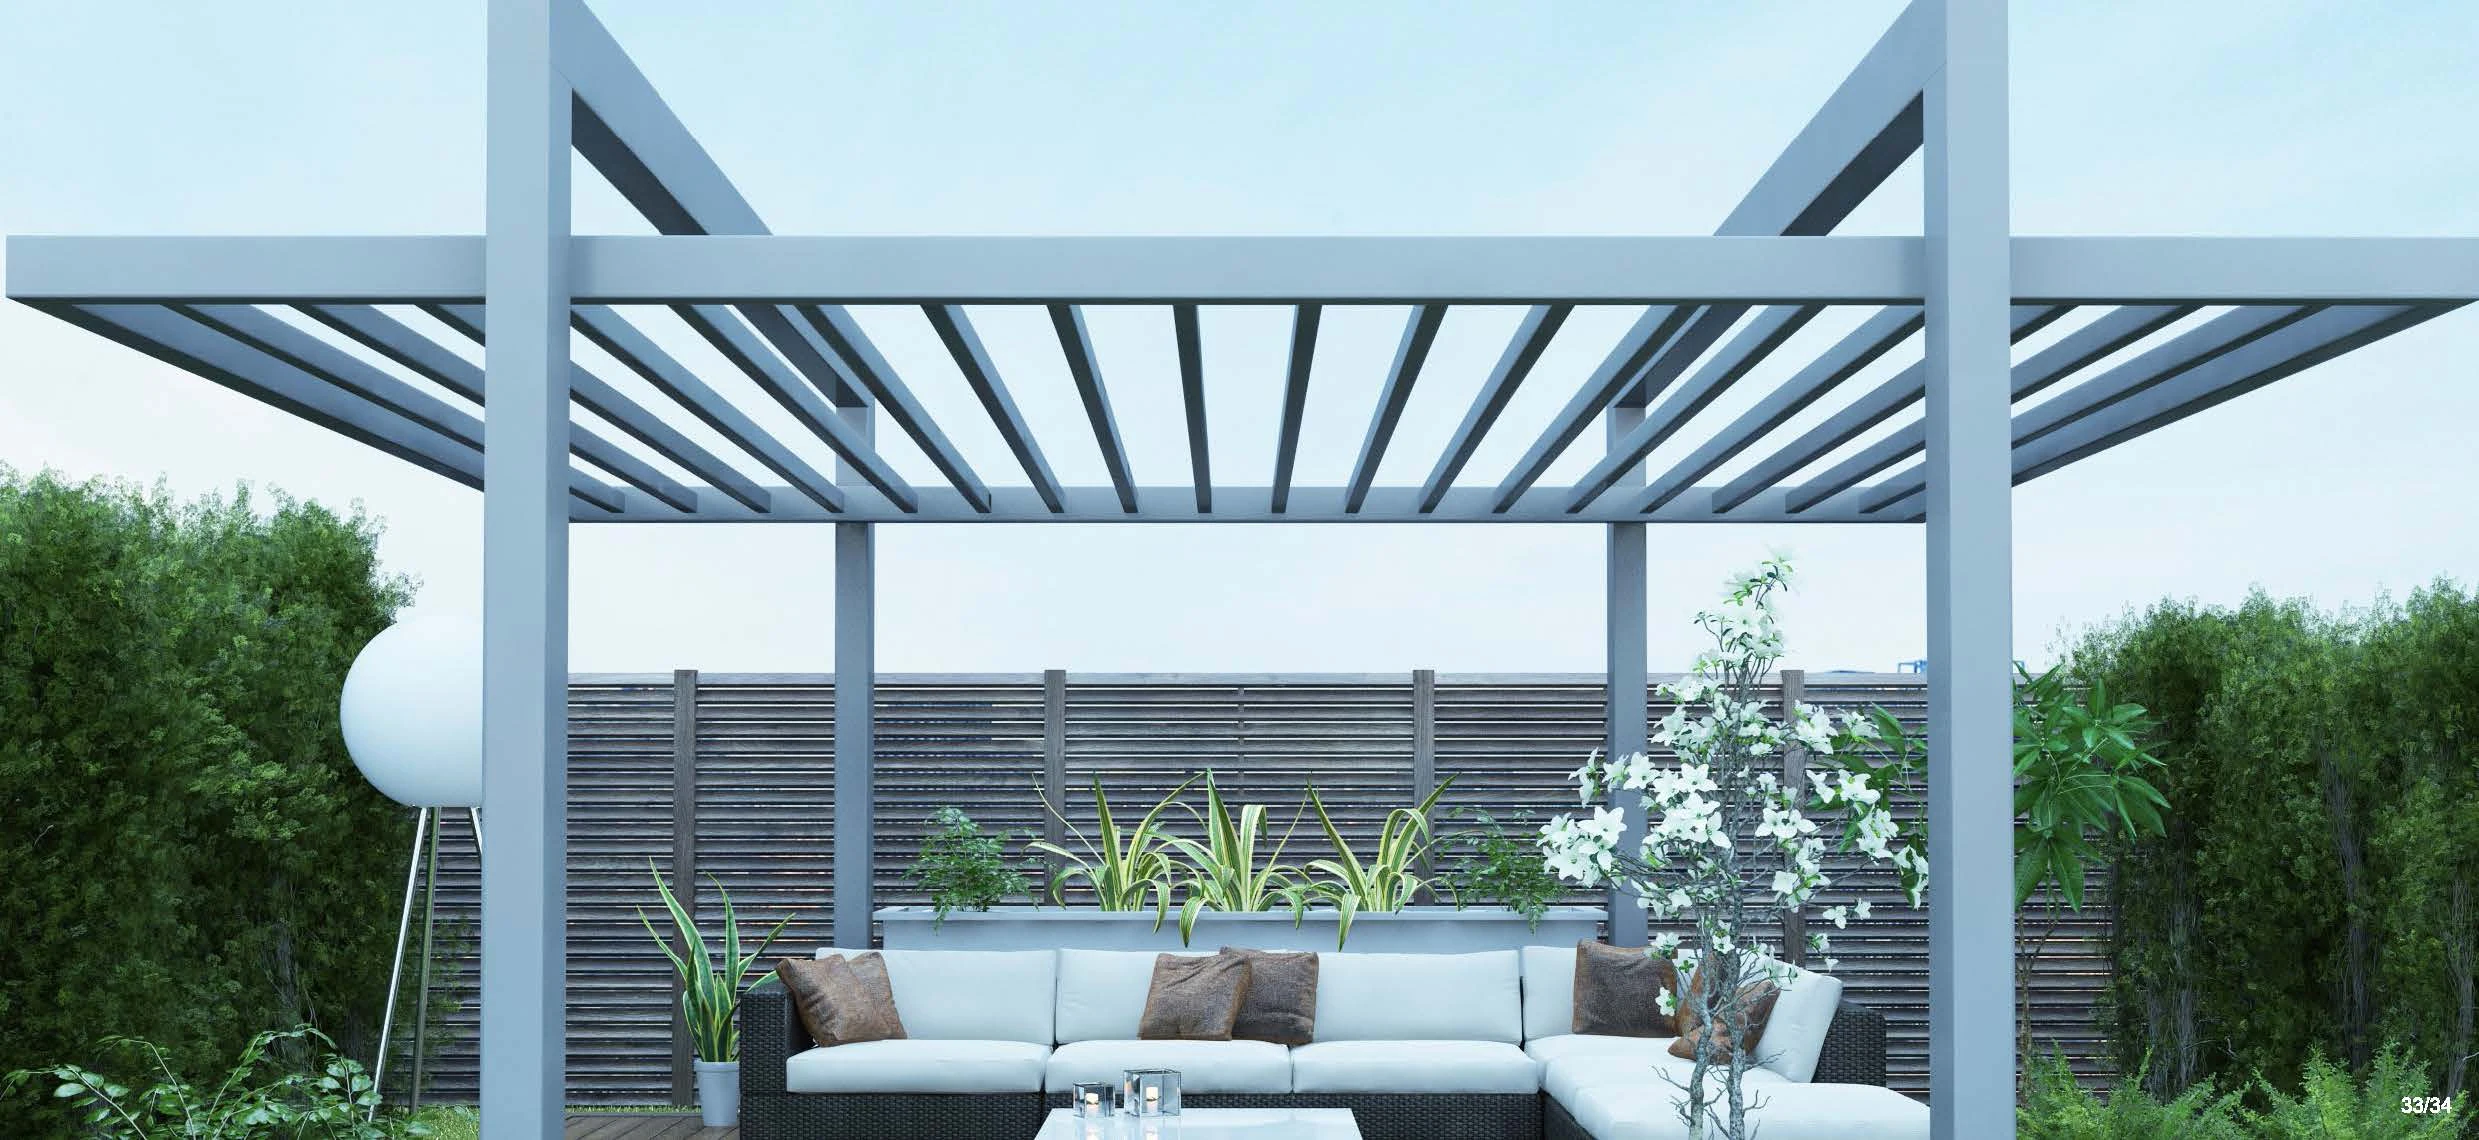 Wholesale customized design aluminium backyard patio pergola with LED louvre pergola for outdoor From m.alibaba.com